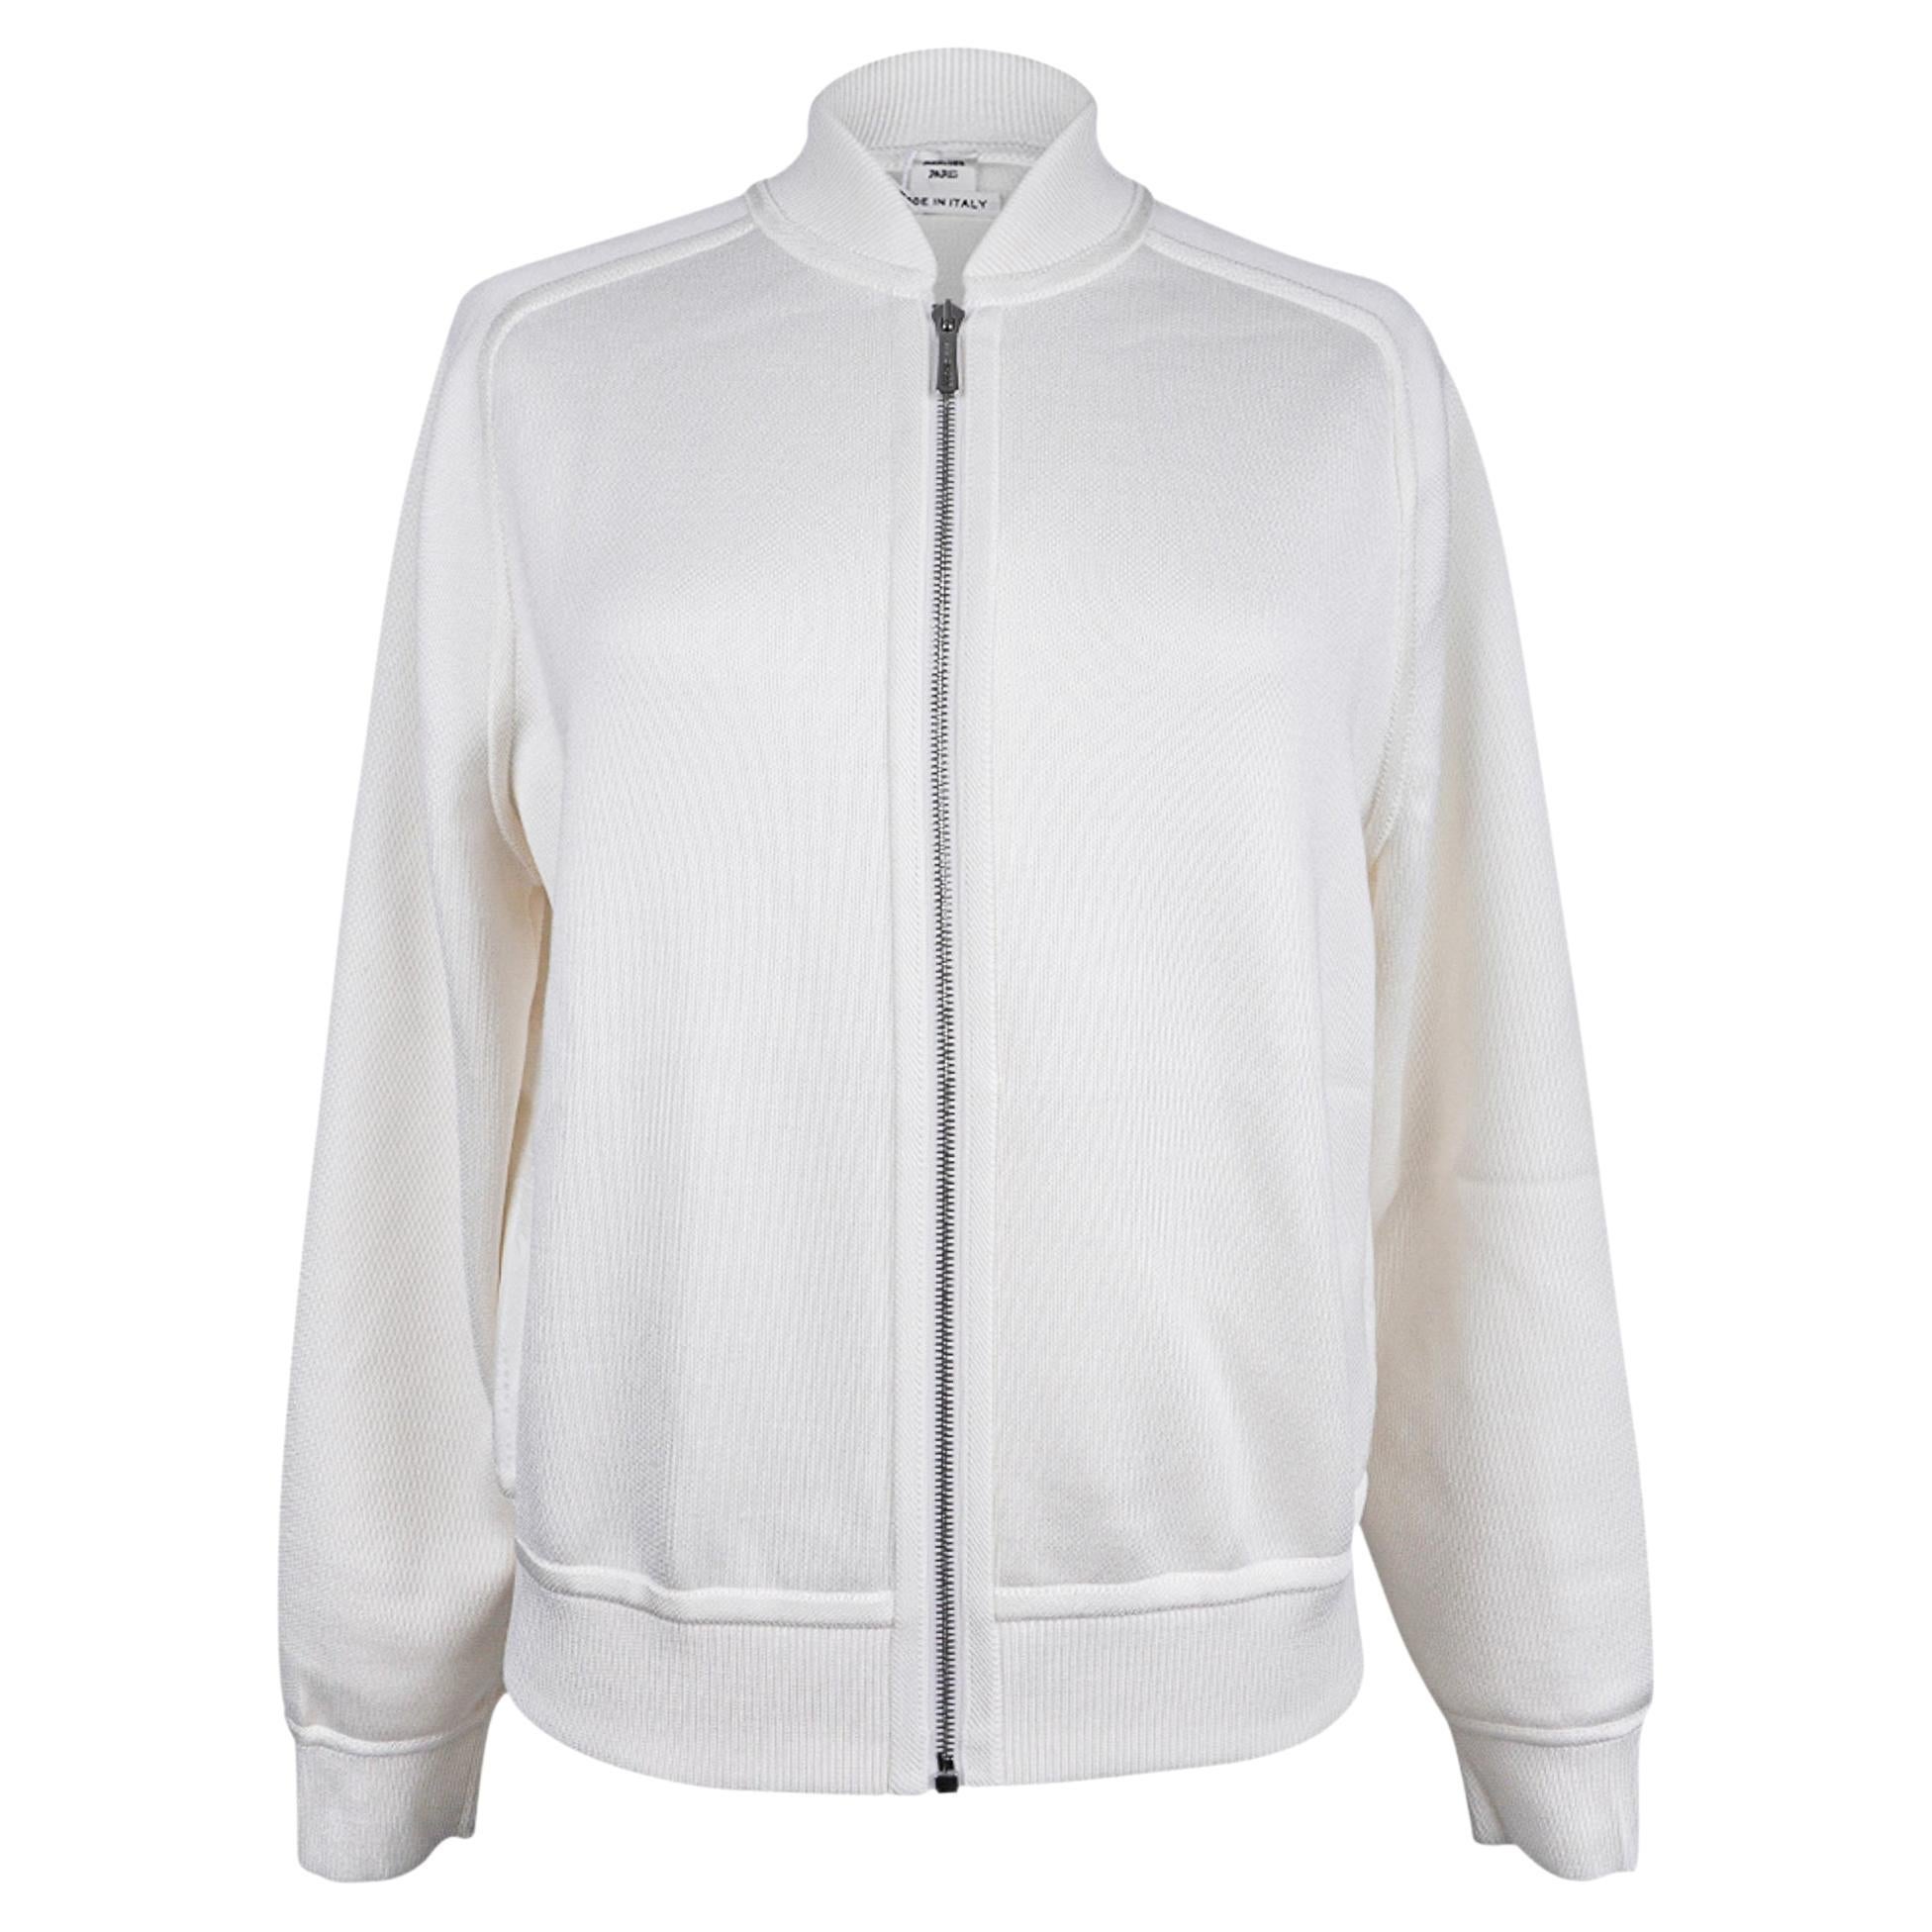 Hermes Cardigan Zip Clic Clac Winter White Jacket 38 / 6